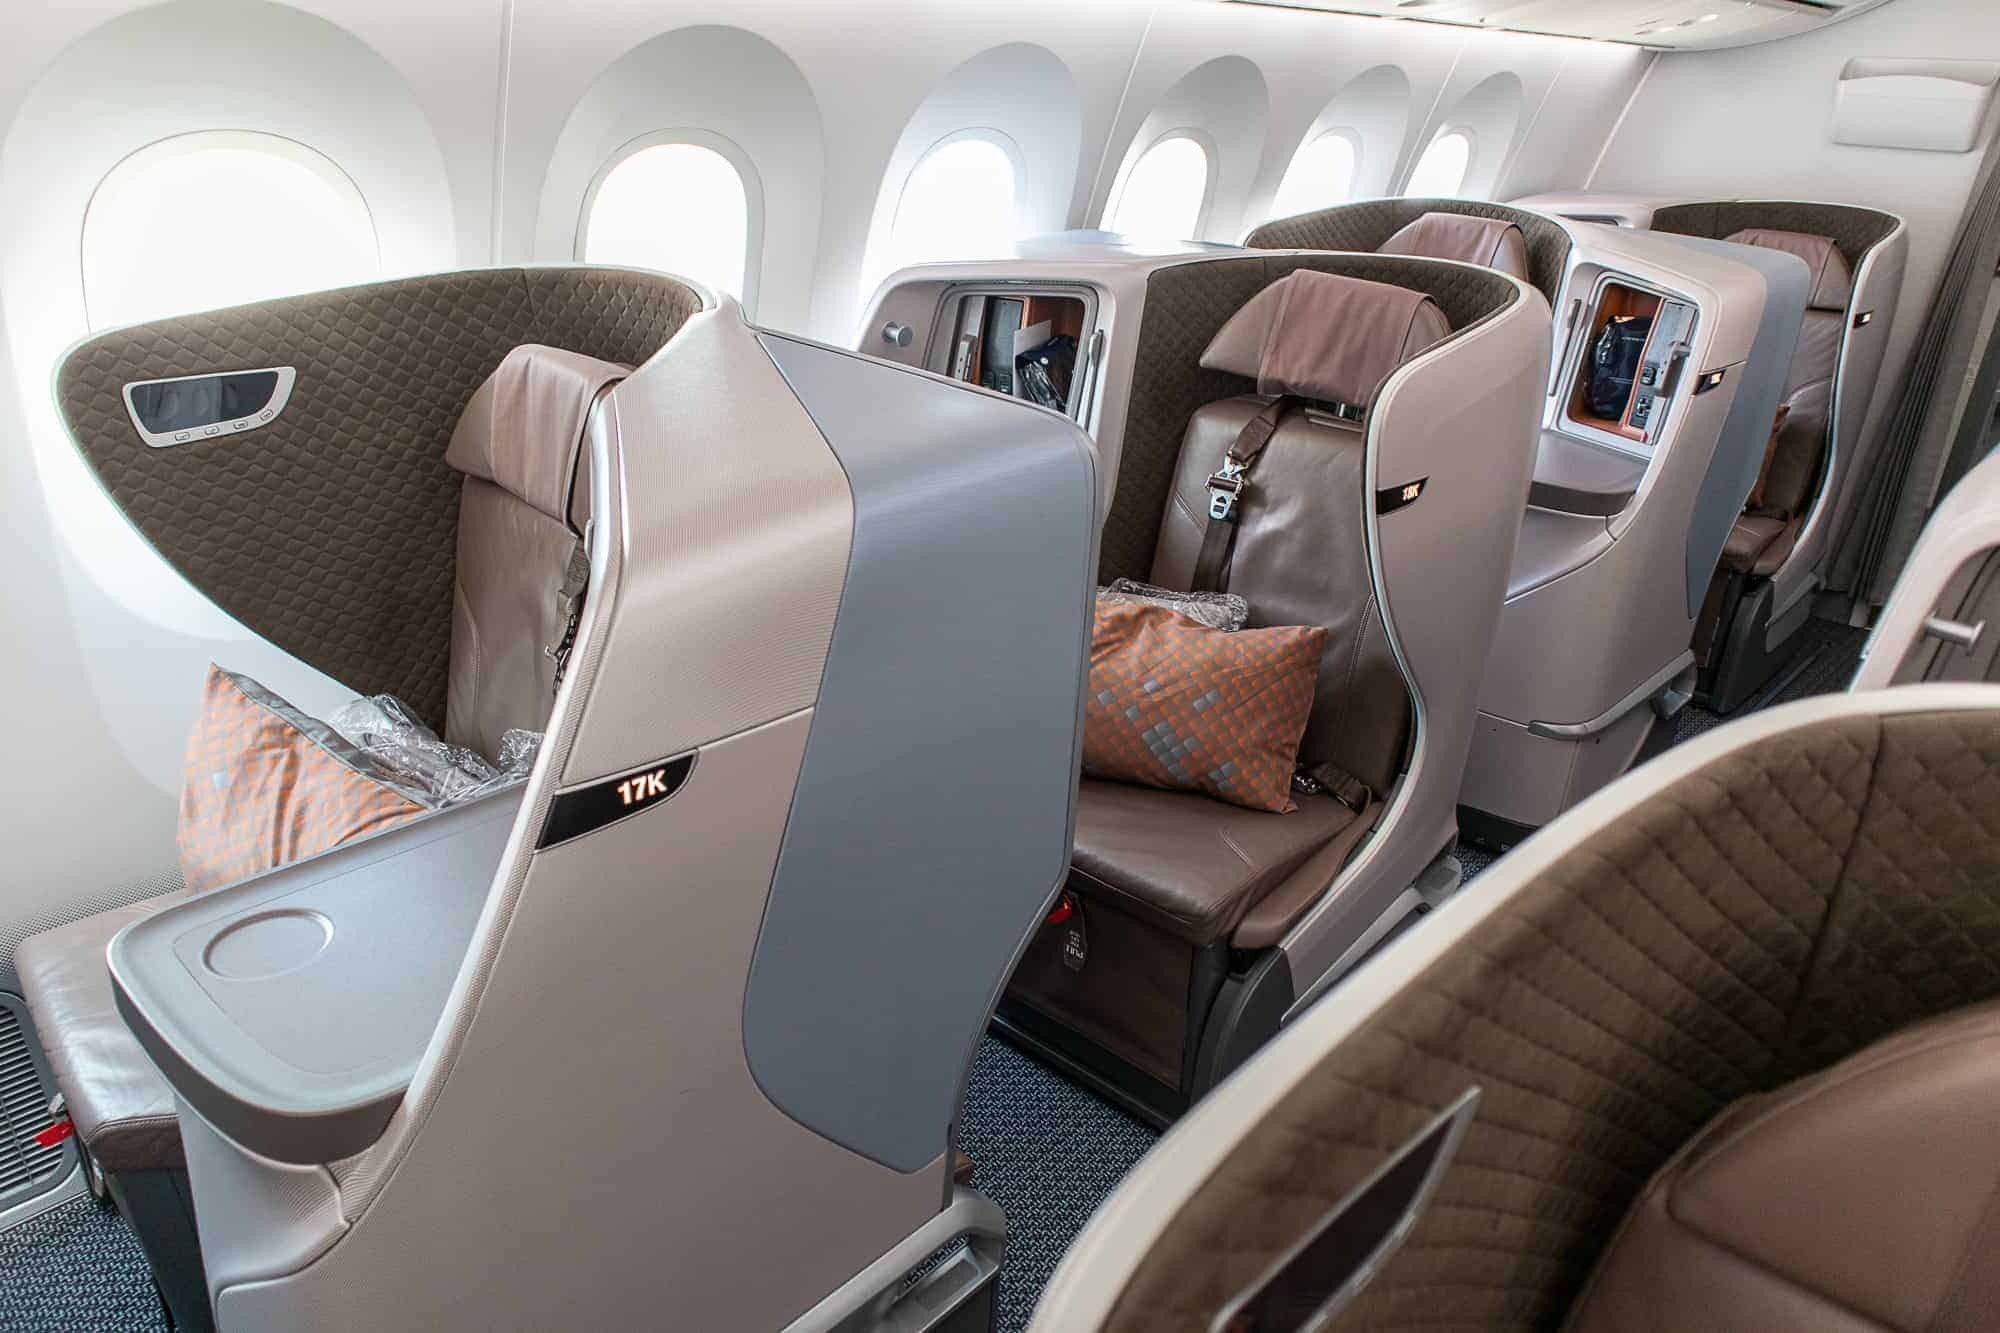 https://travel-dealz.com/app/uploads/Singapore-Airlines-Boeing-787-10-Business-Class-Cabin.jpg